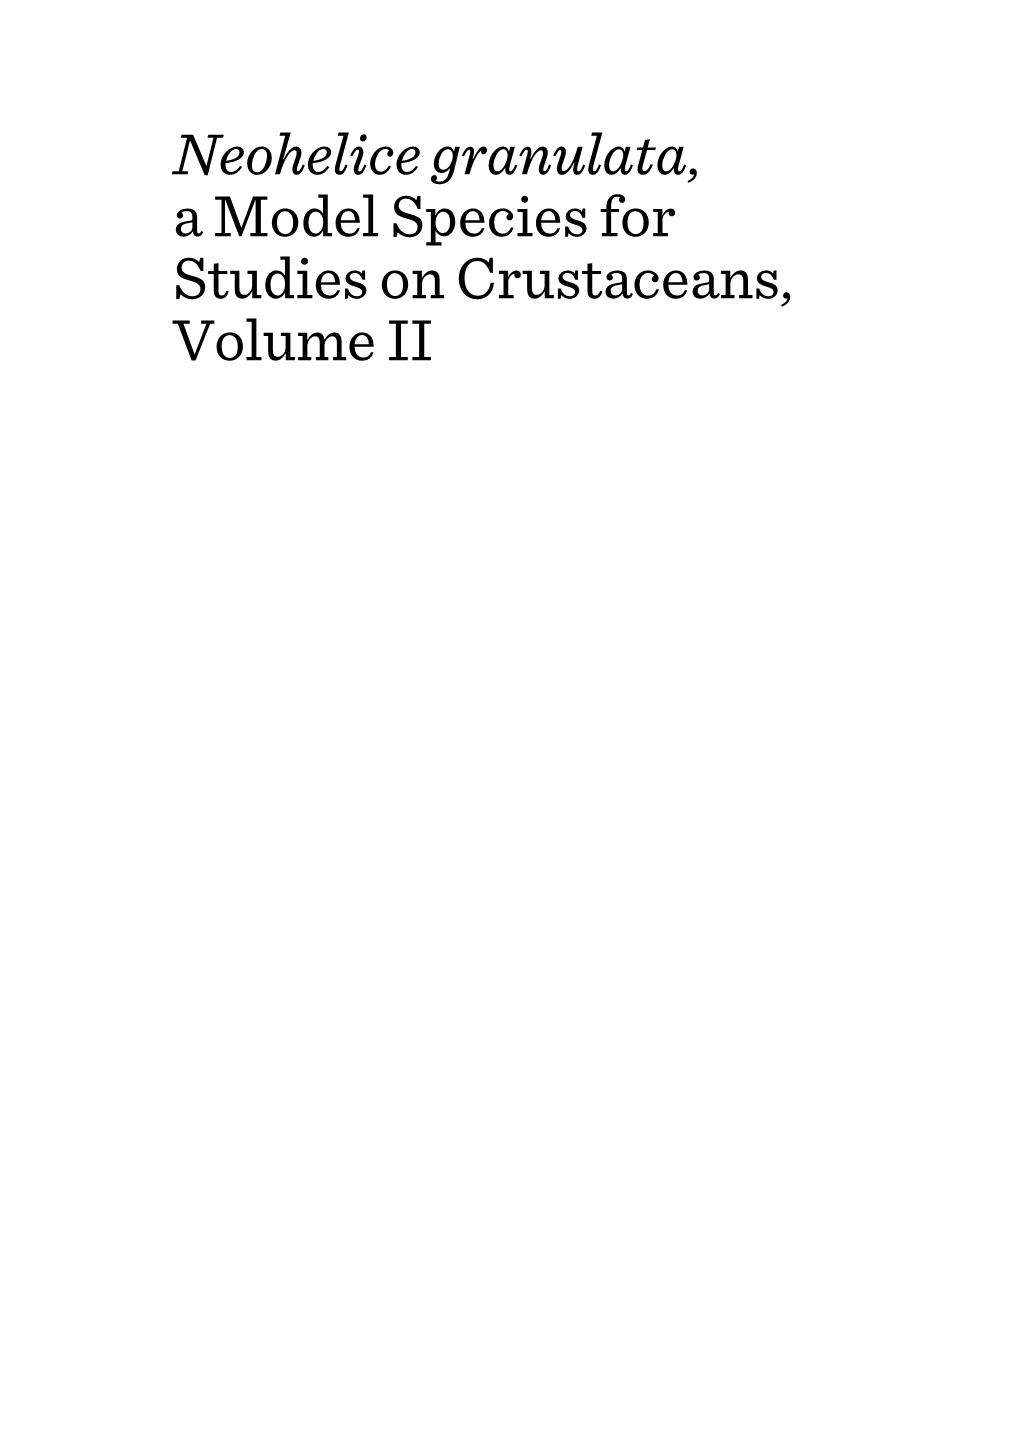 Neohelice Granulata, a Model Species for Studies on Crustaceans, Volume II